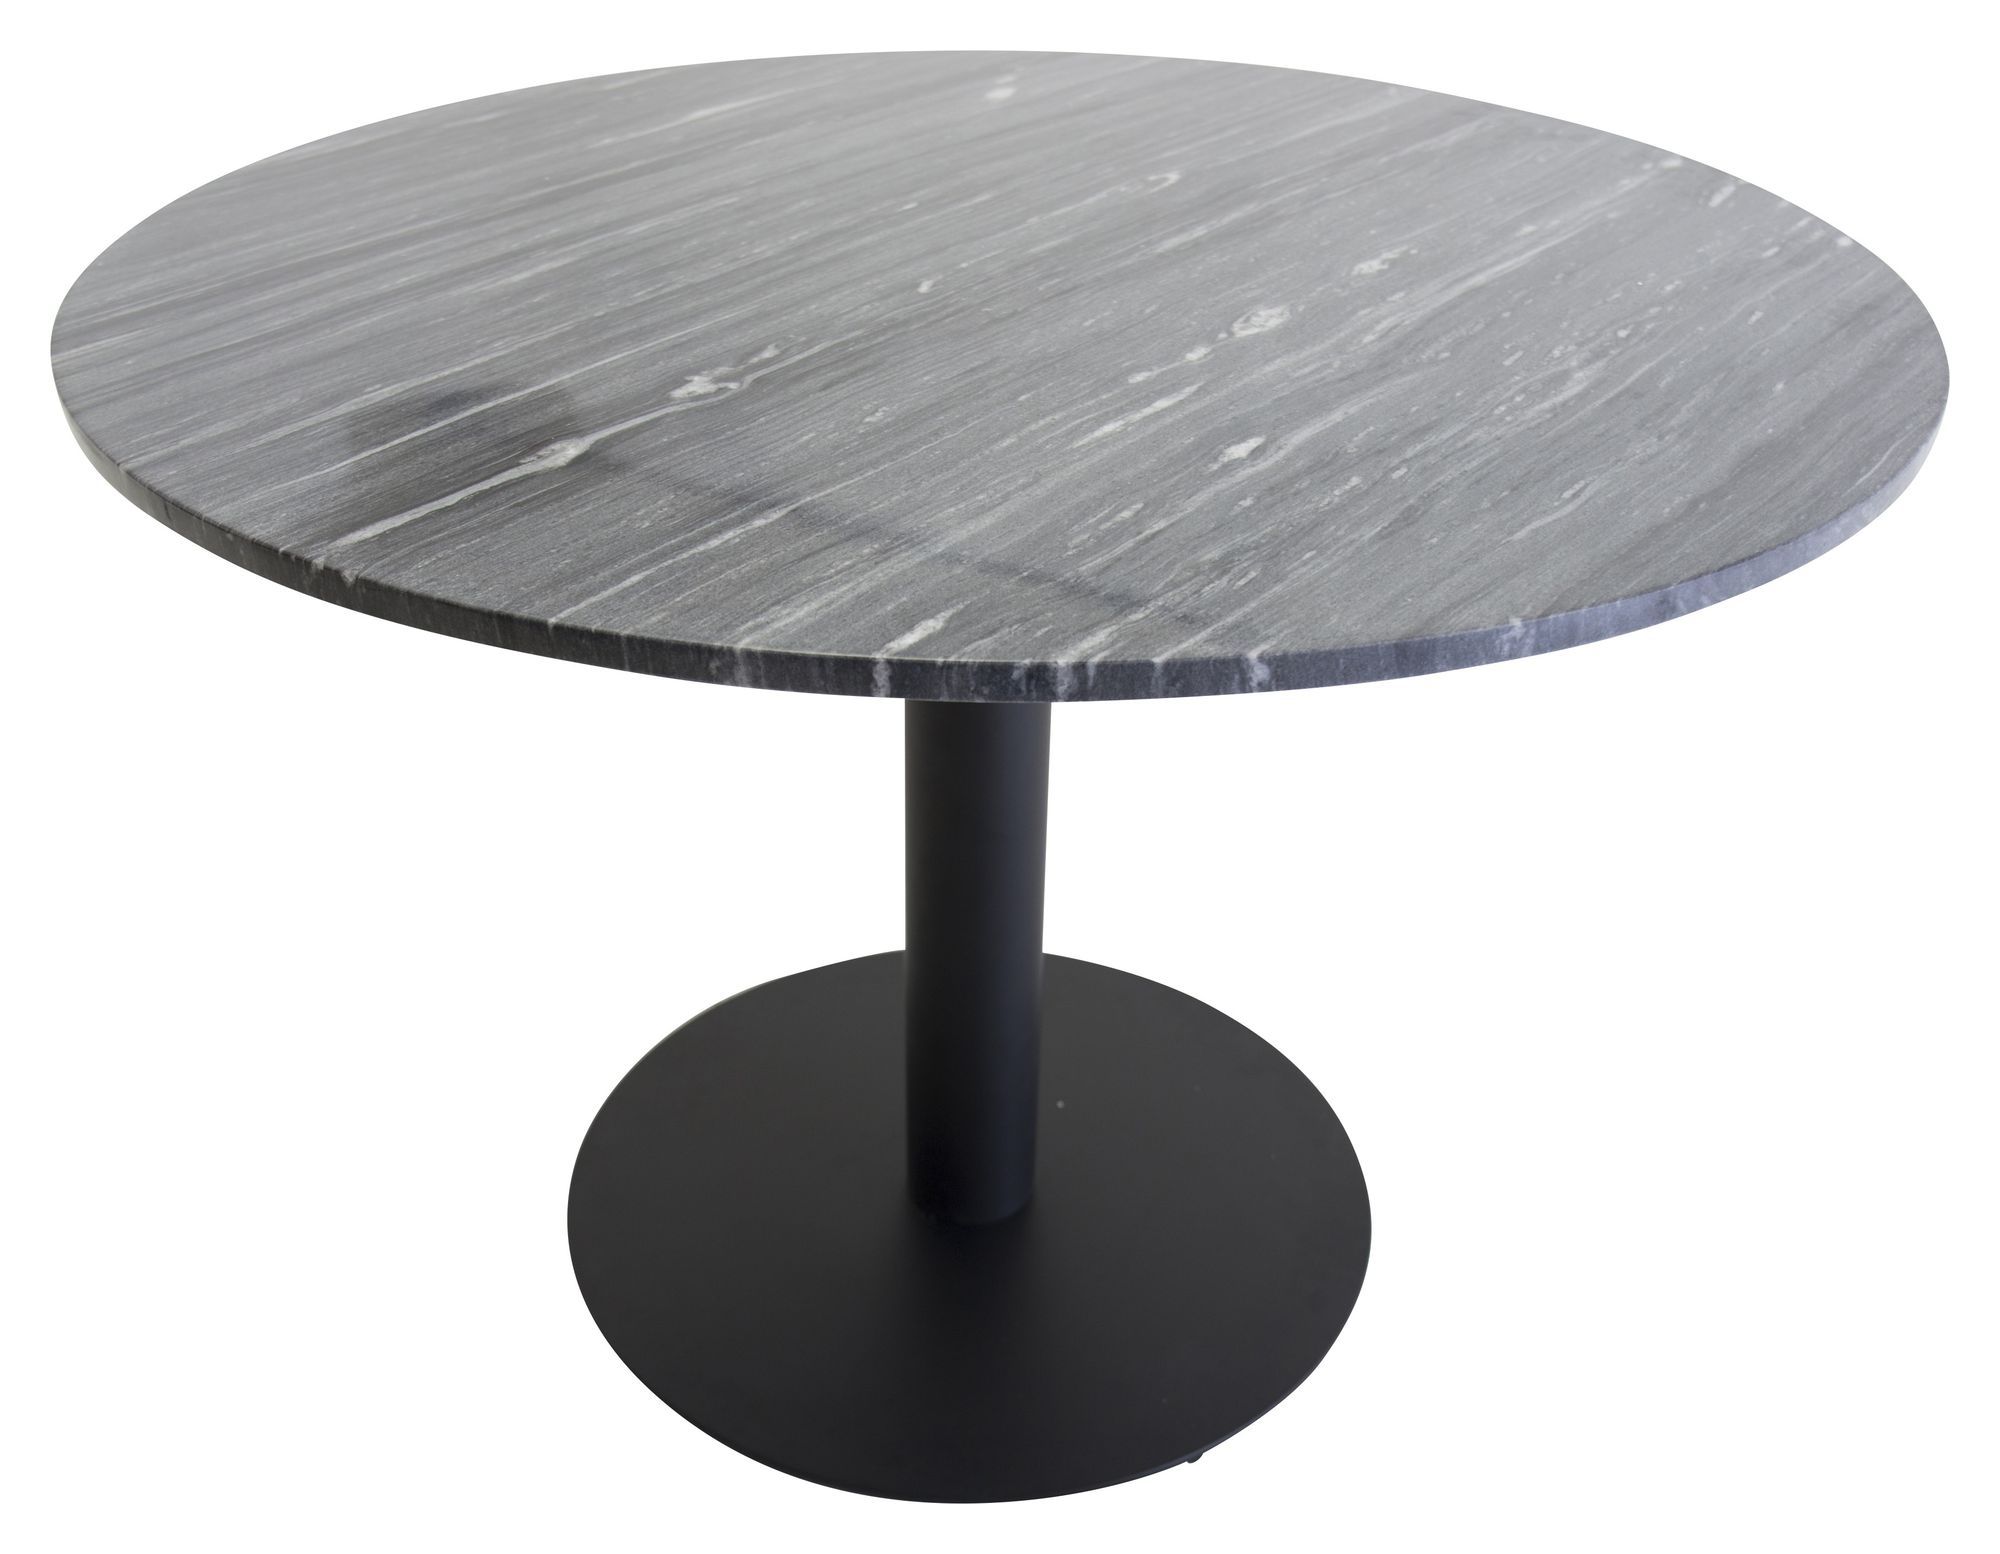 Venture Design Estelle Spisebord, Gråsort marmor, Ø106